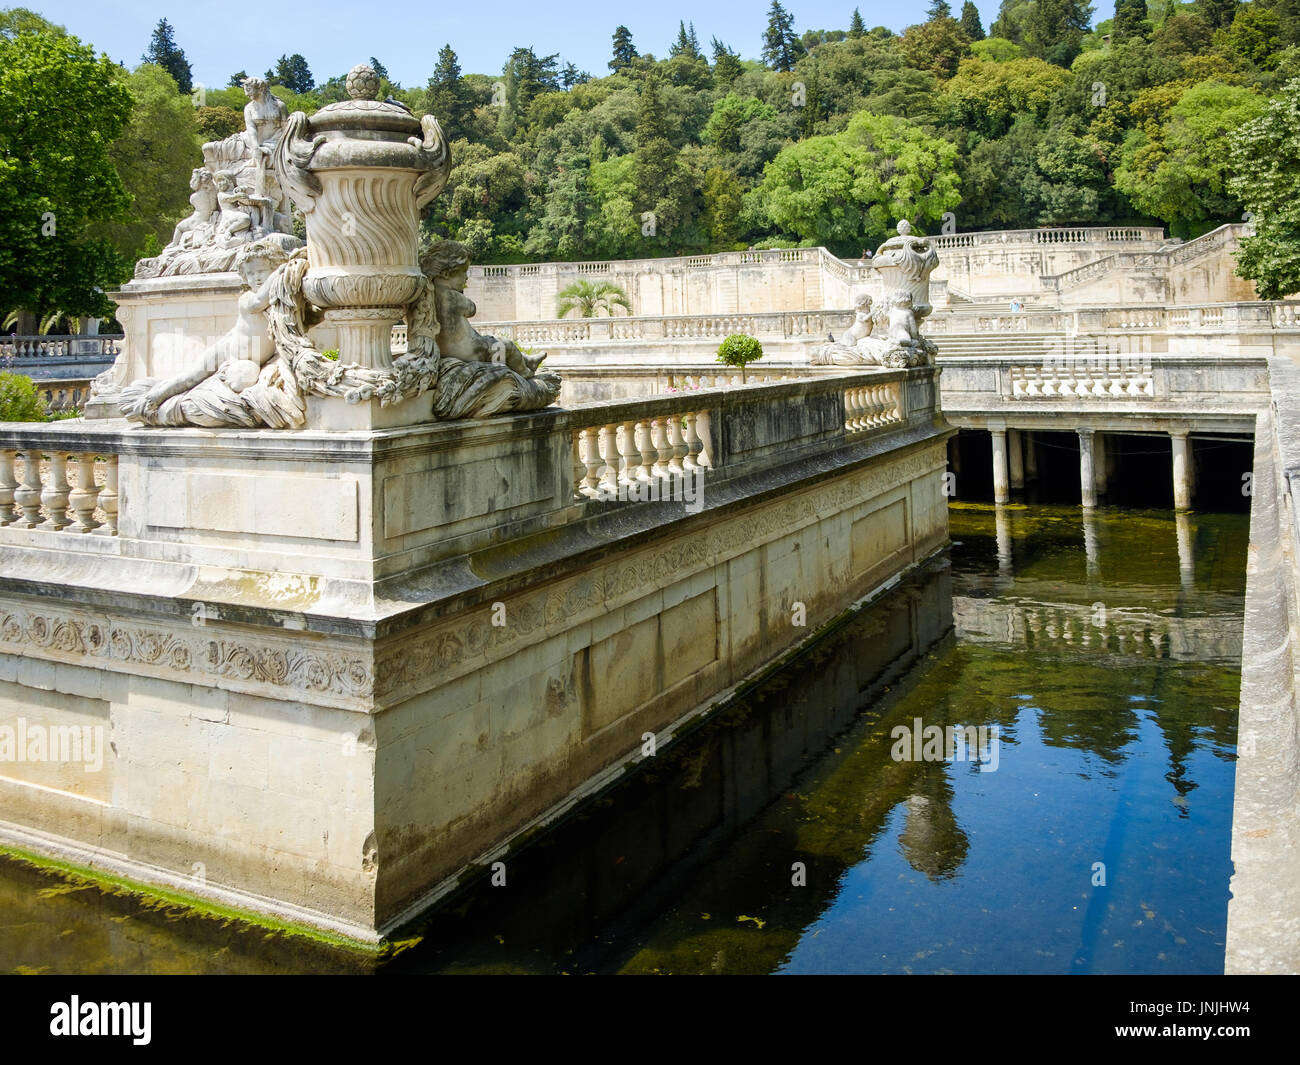 Jardin de la fontaine nimes hi-res stock photography and images - Alamy